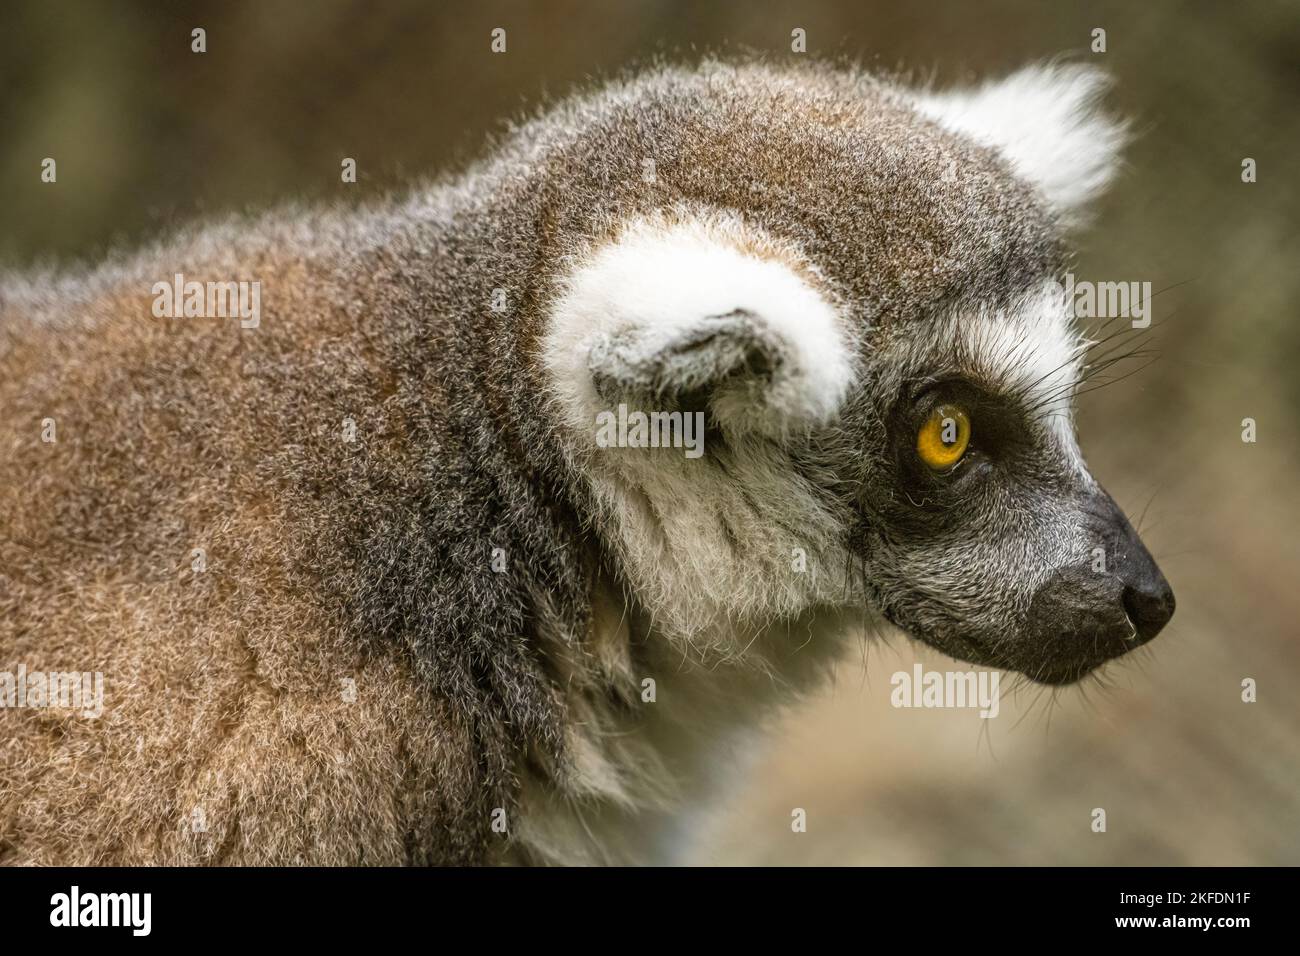 Krone Lemur (Eulemur coronatus) aus Madagaskar, einem Inselland vor der südostafrikanischen Küste, im Zoo Atlanta in Atlanta, Georgia. (USA) Stockfoto